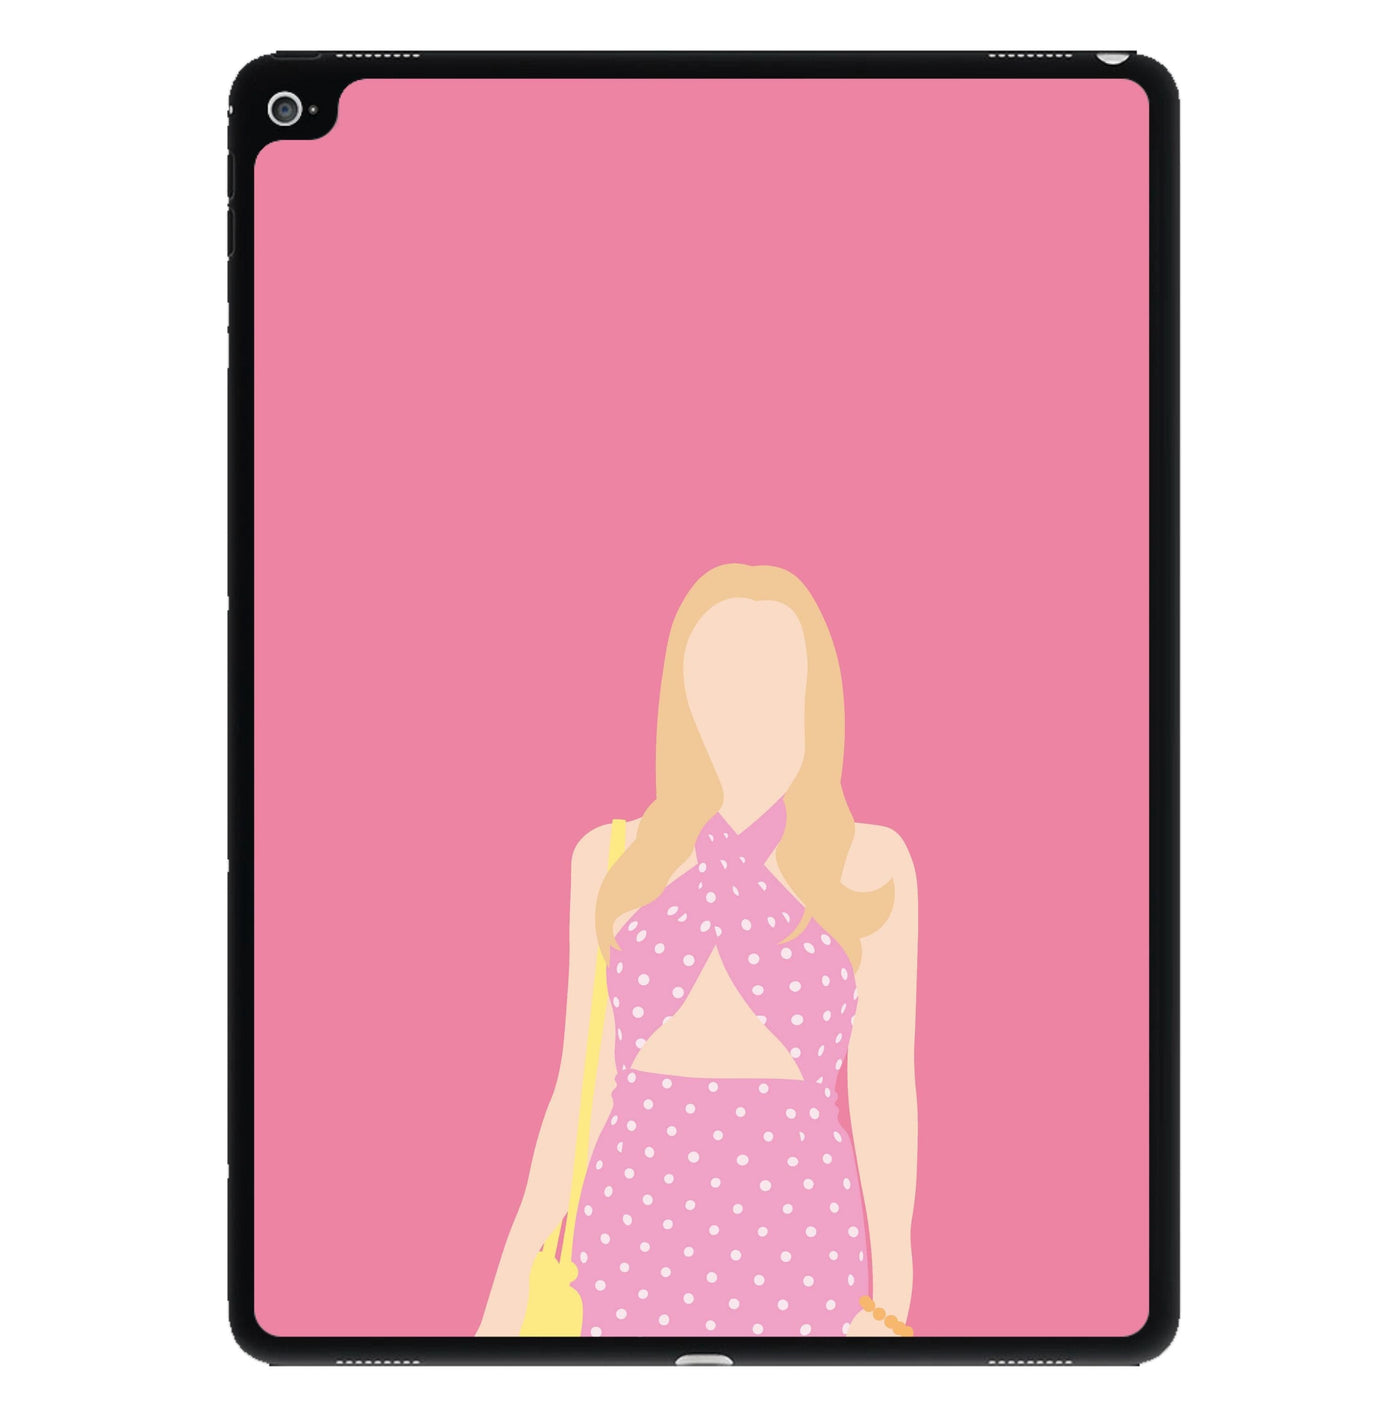 Polka Dot Dress - Margot Robbie iPad Case